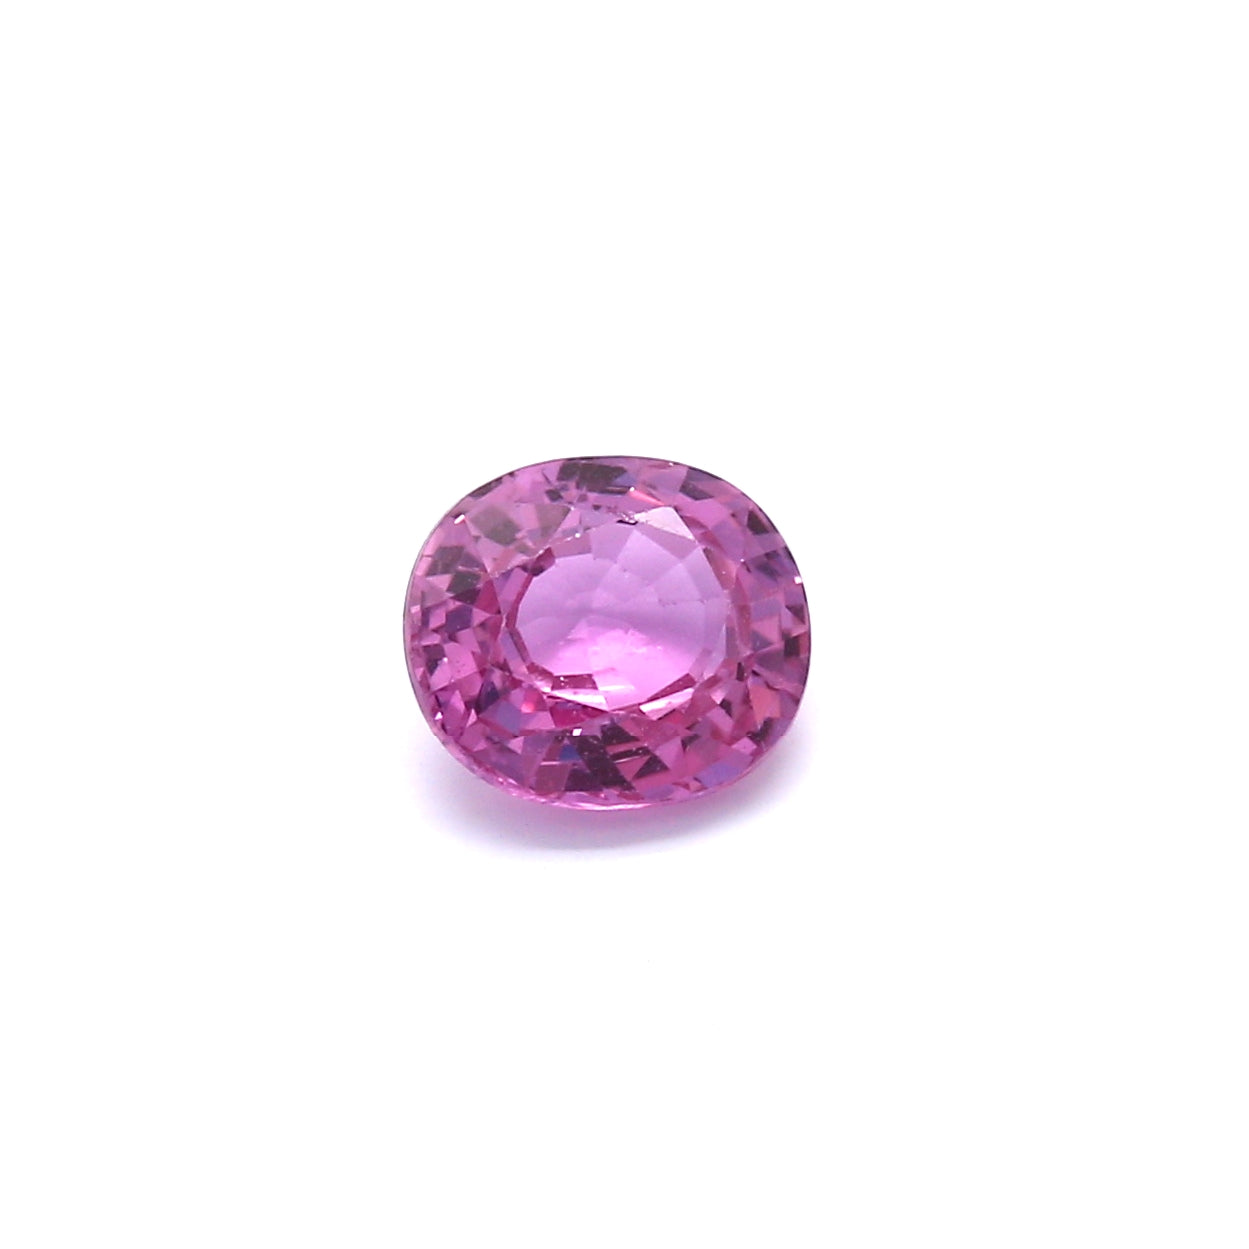 1.54ct Purplish Pink, Oval Sapphire, Heated, Madagascar - 7.17 x 6.32 x 3.84mm